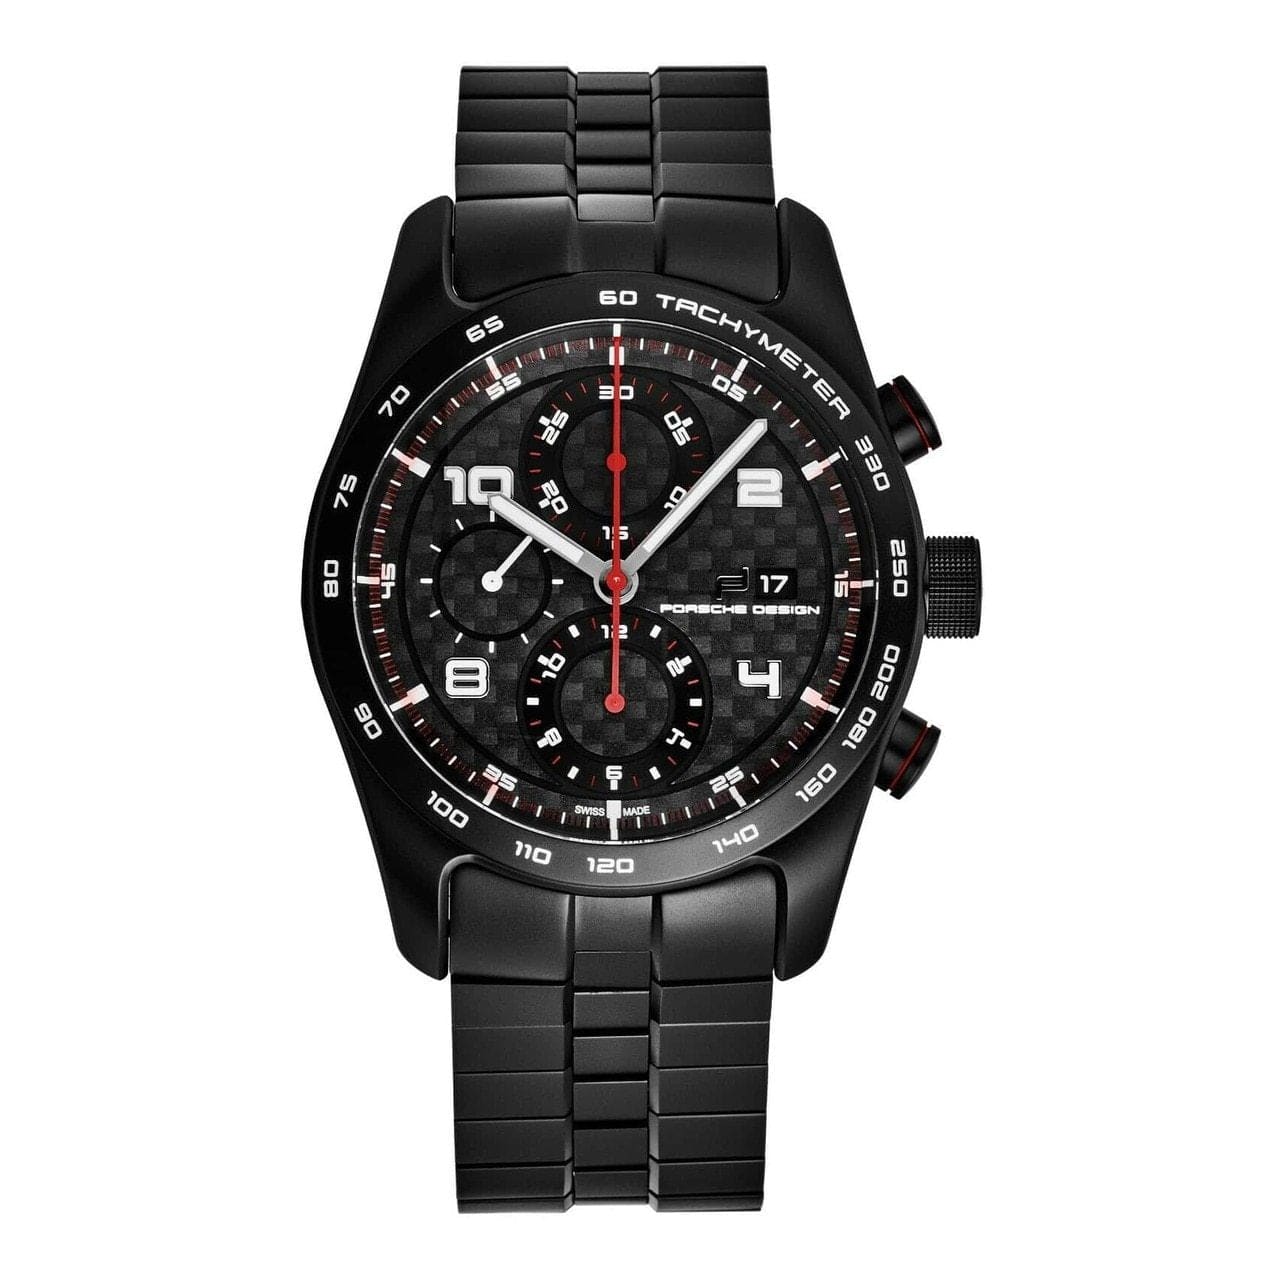 Porsche Design 6010.1040.05012 Black Dial Black Titanium Chronograph Watch